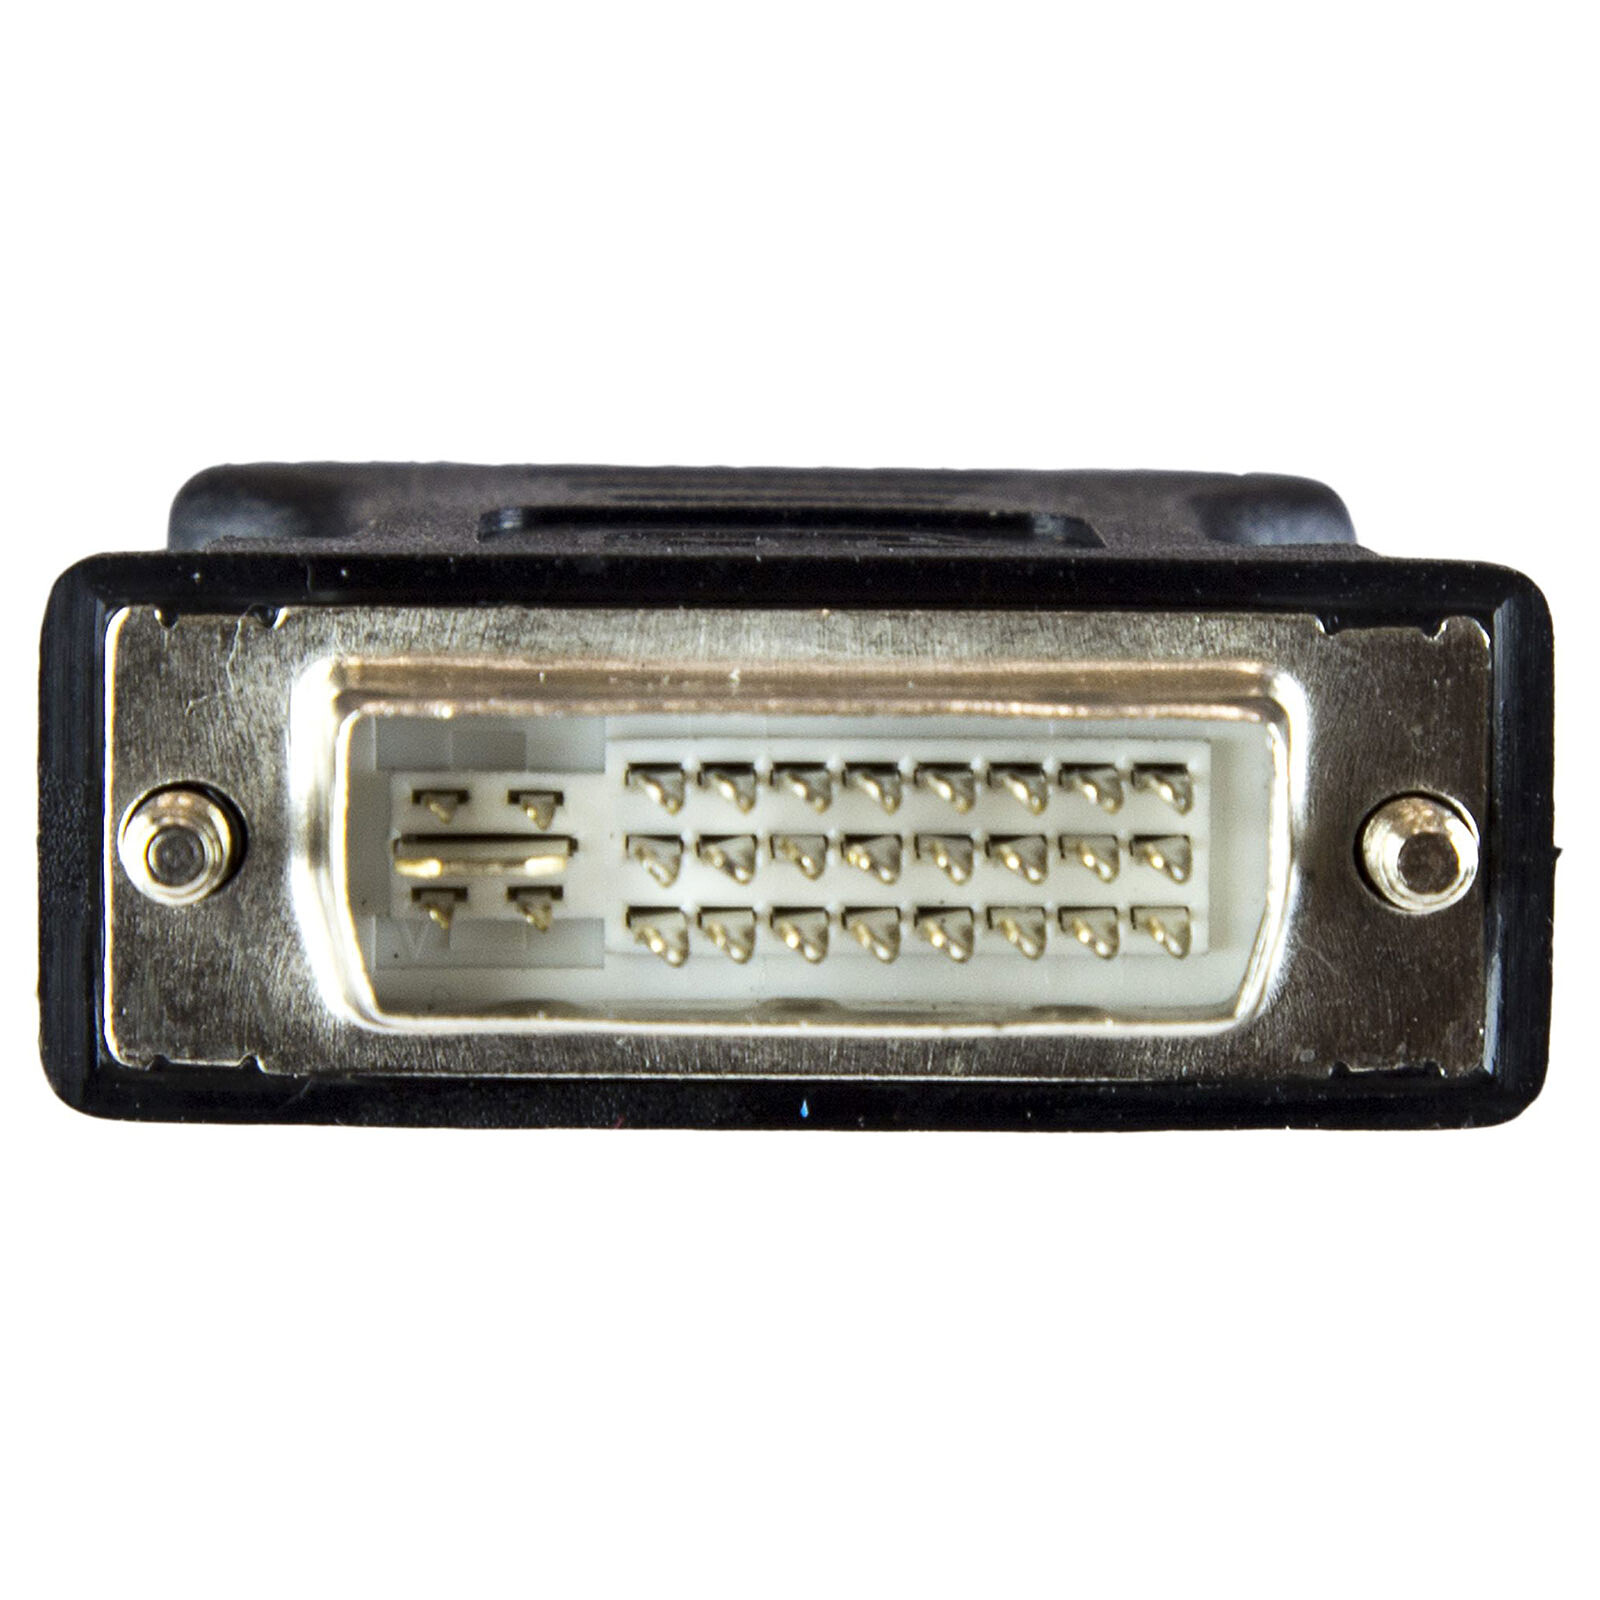 Adaptateur DVI-I Mâle / HDMI Femelle - DVI - Garantie 3 ans LDLC